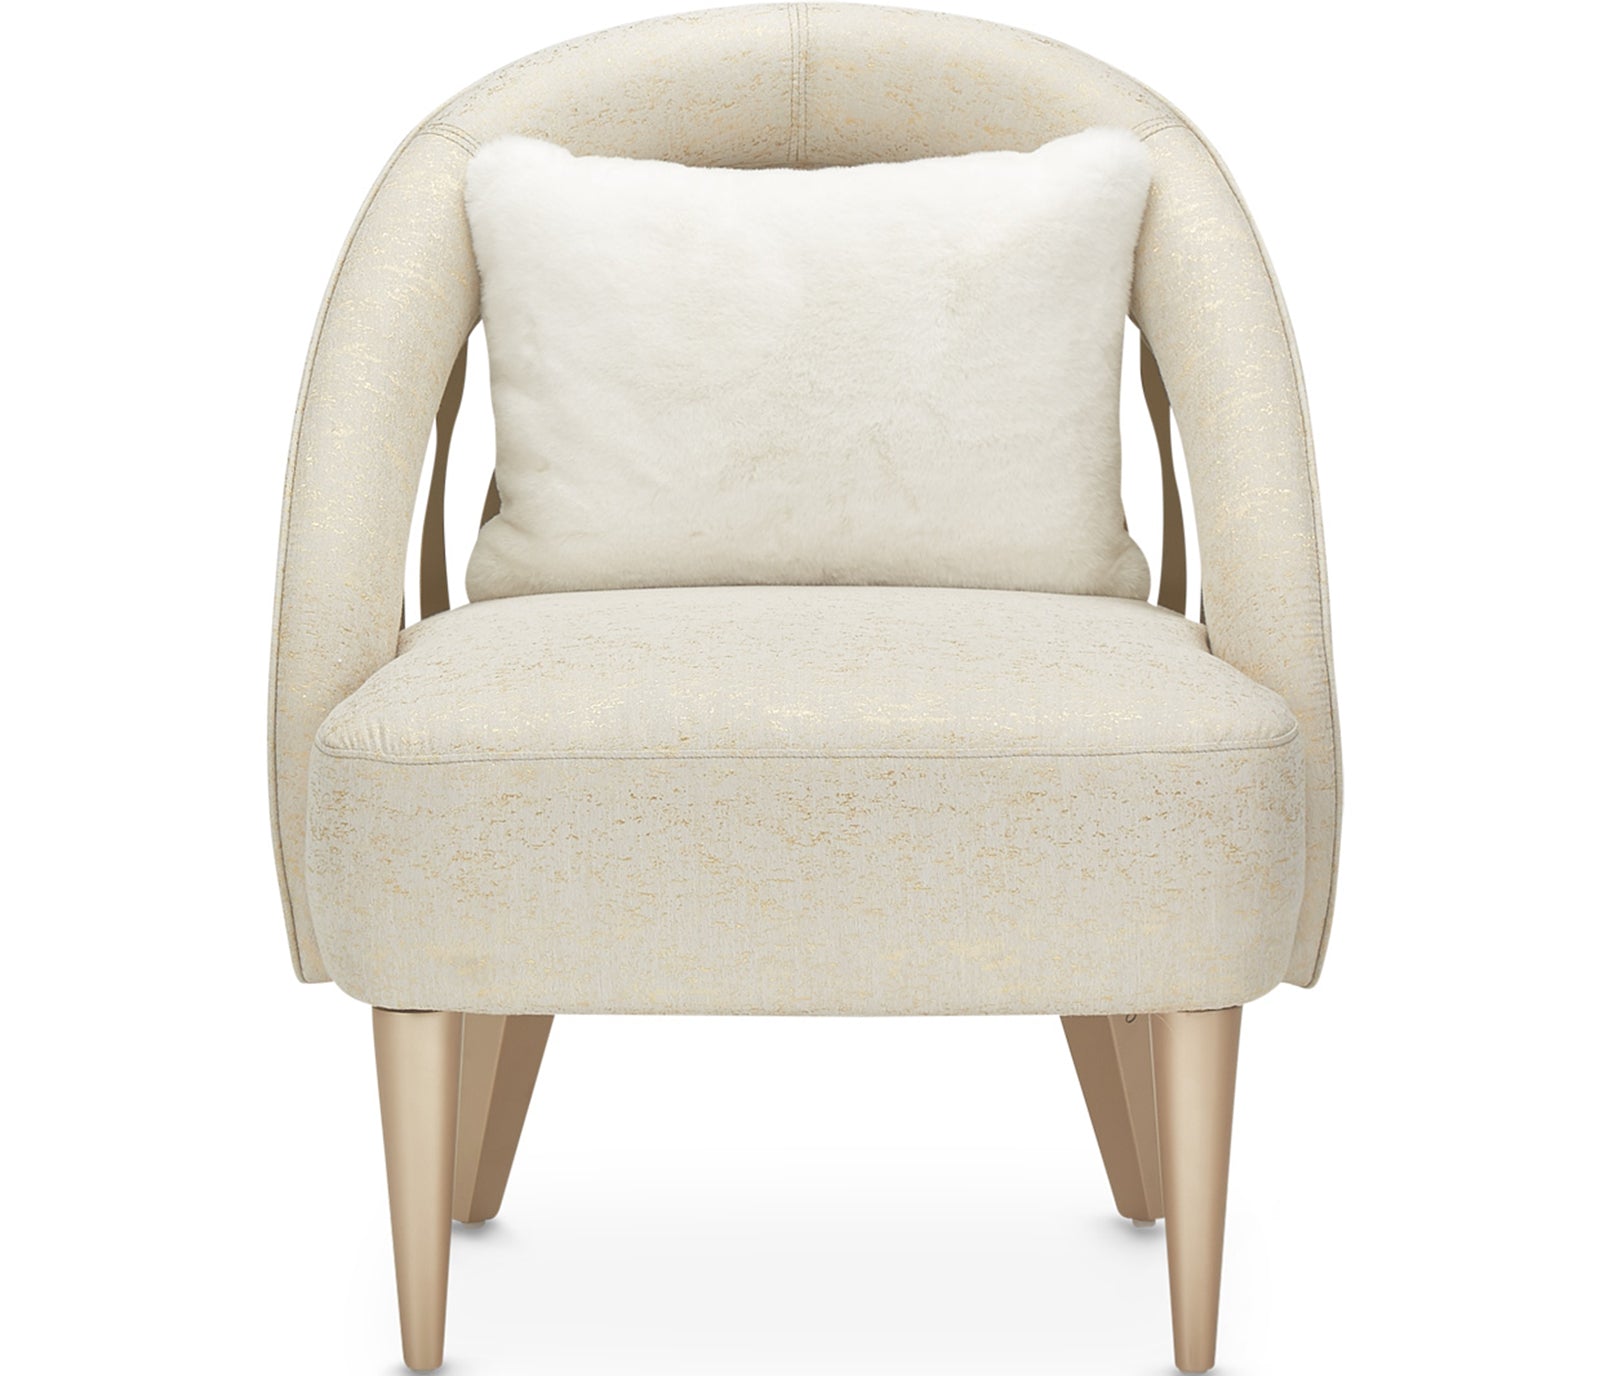 La Rachelle Flame Chair - Champagne Fabric